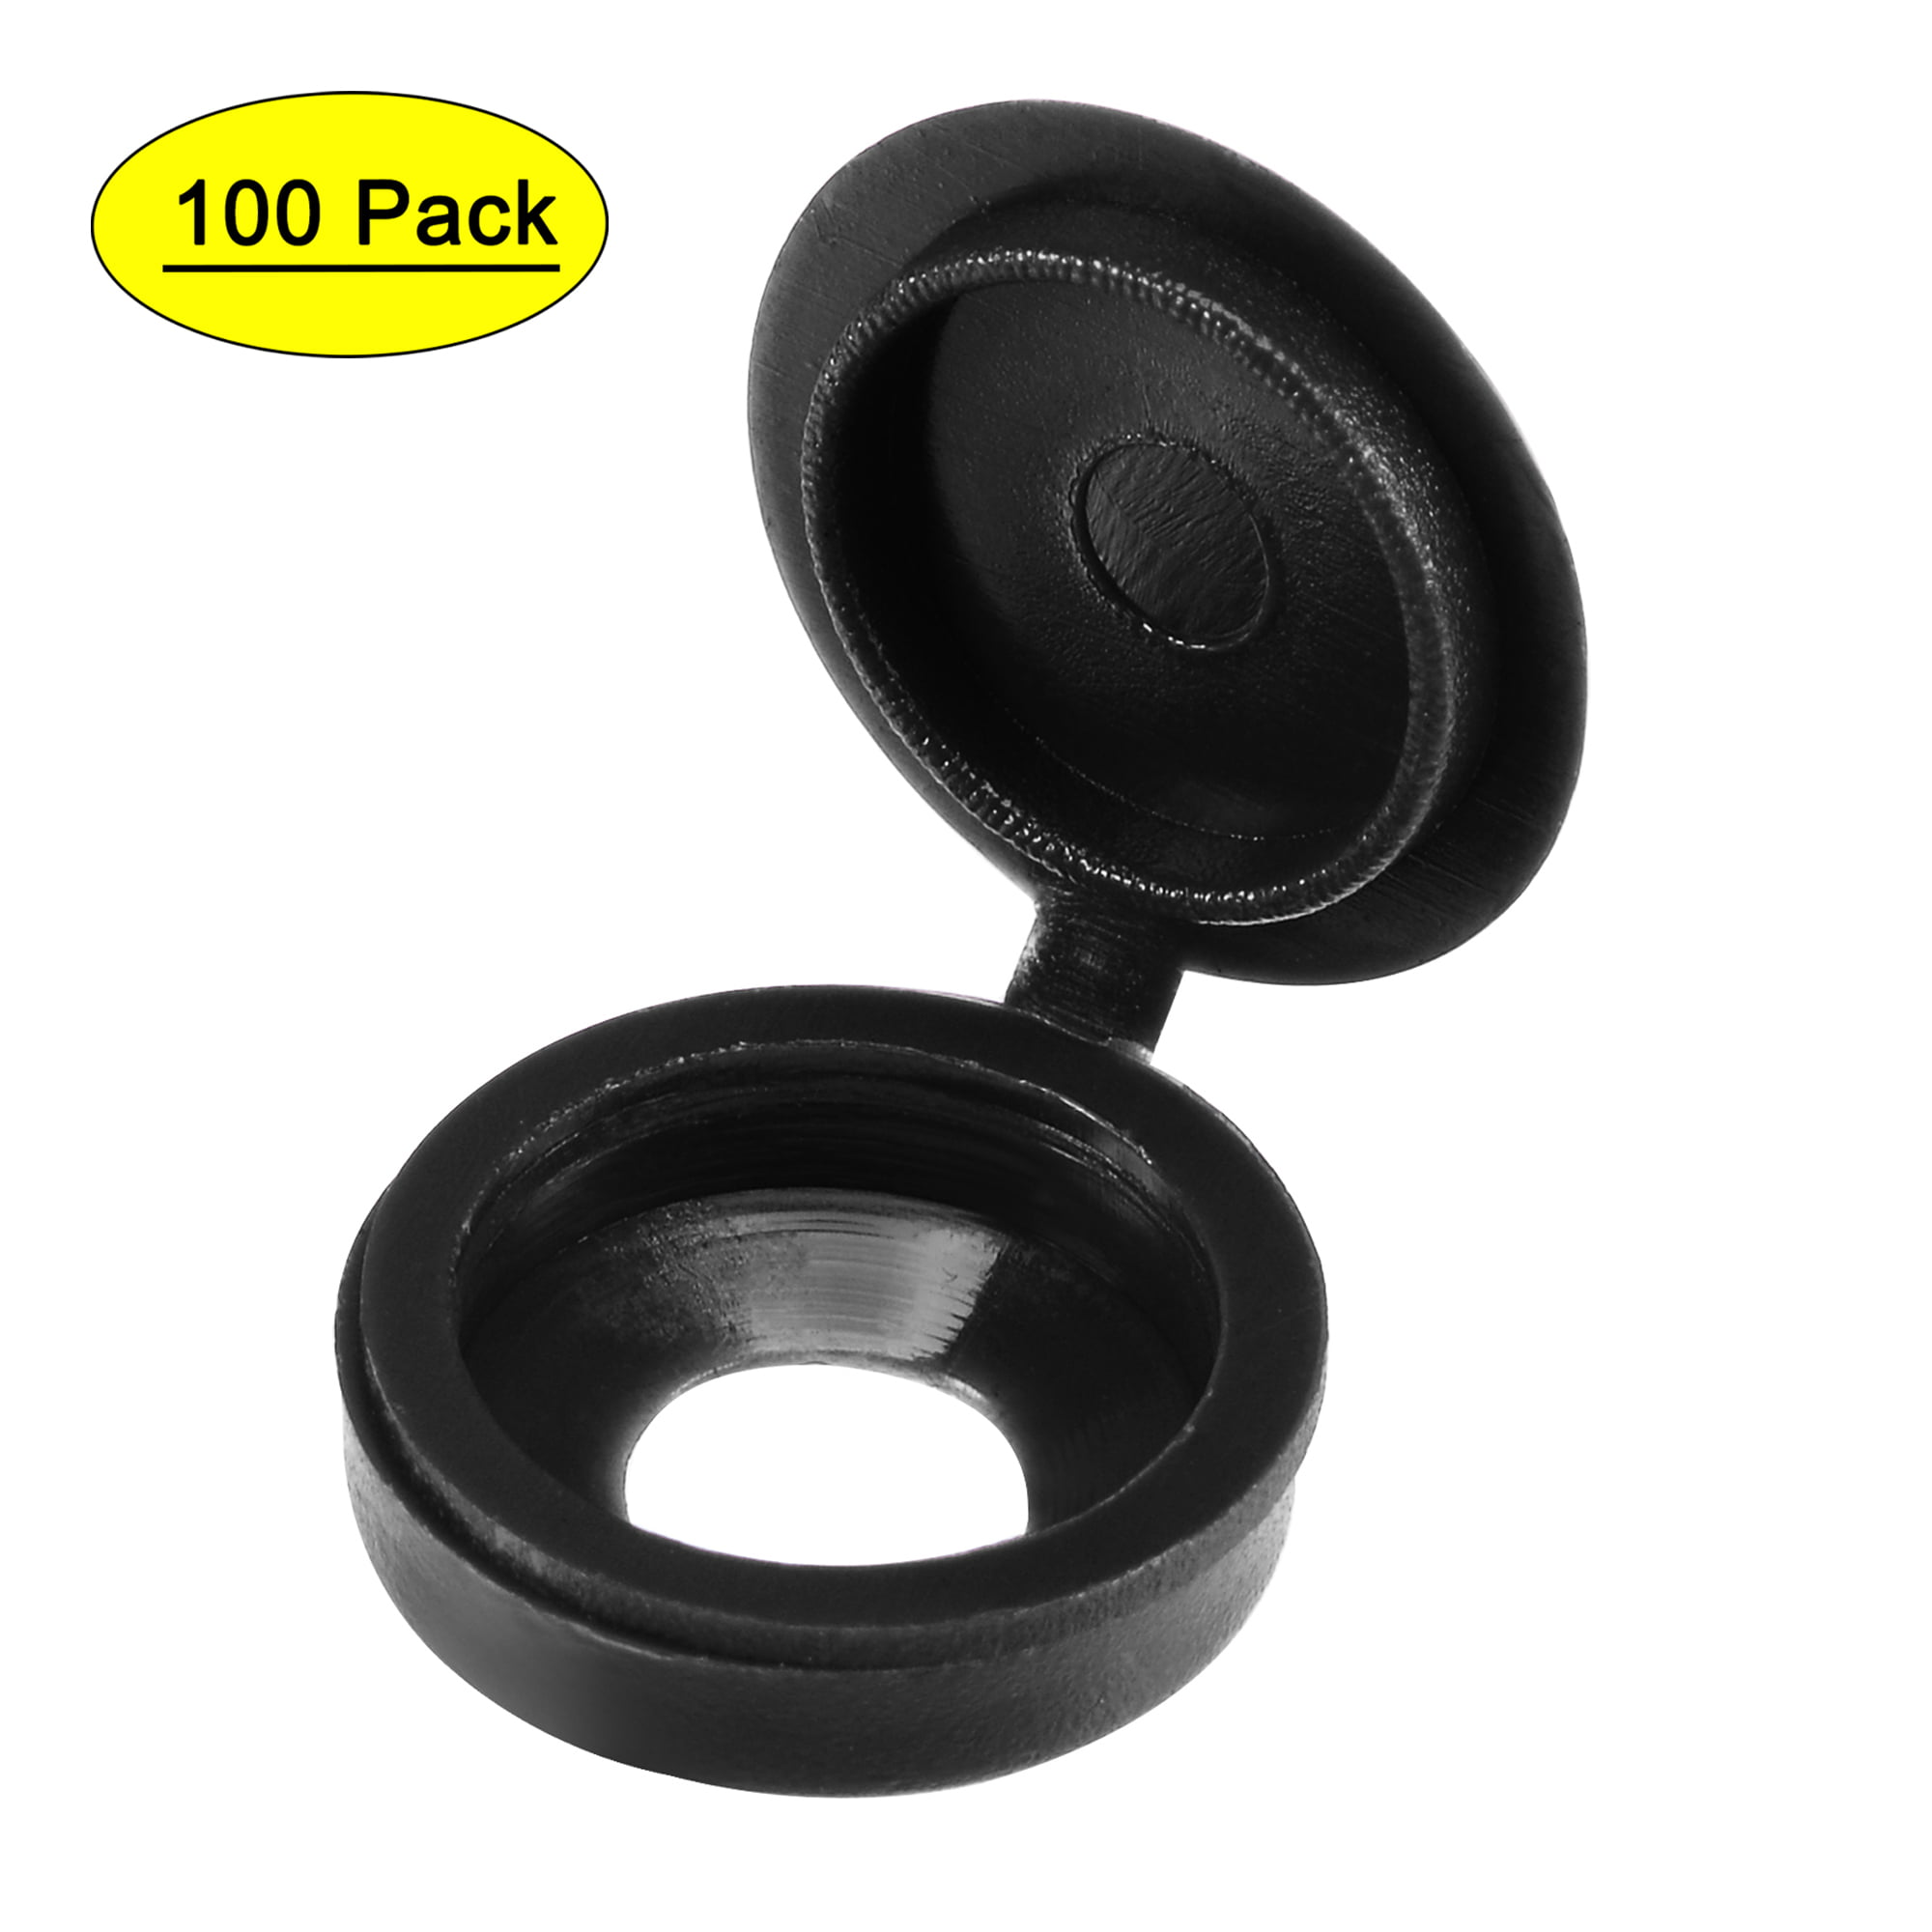 100 Pack Tan Plastic Screw Head Cap Covers Washers #6#8 Snap Caps Furniture RV 